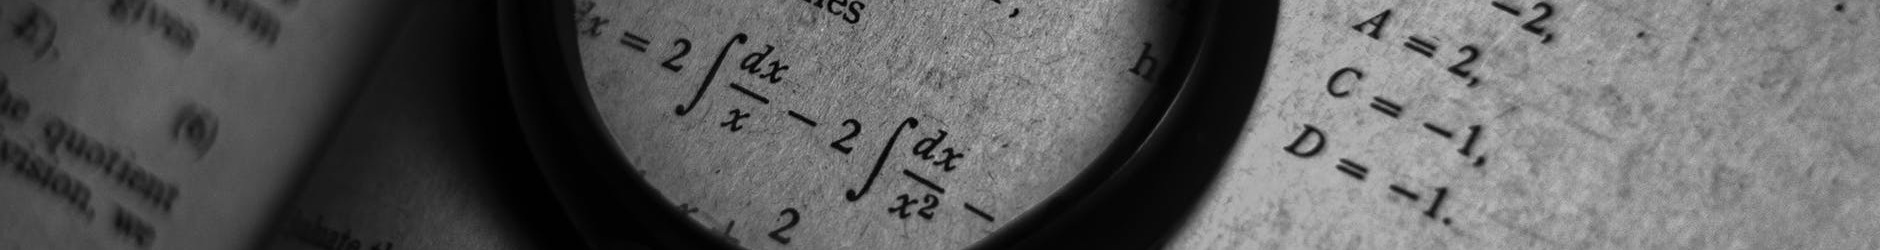 math equations background image